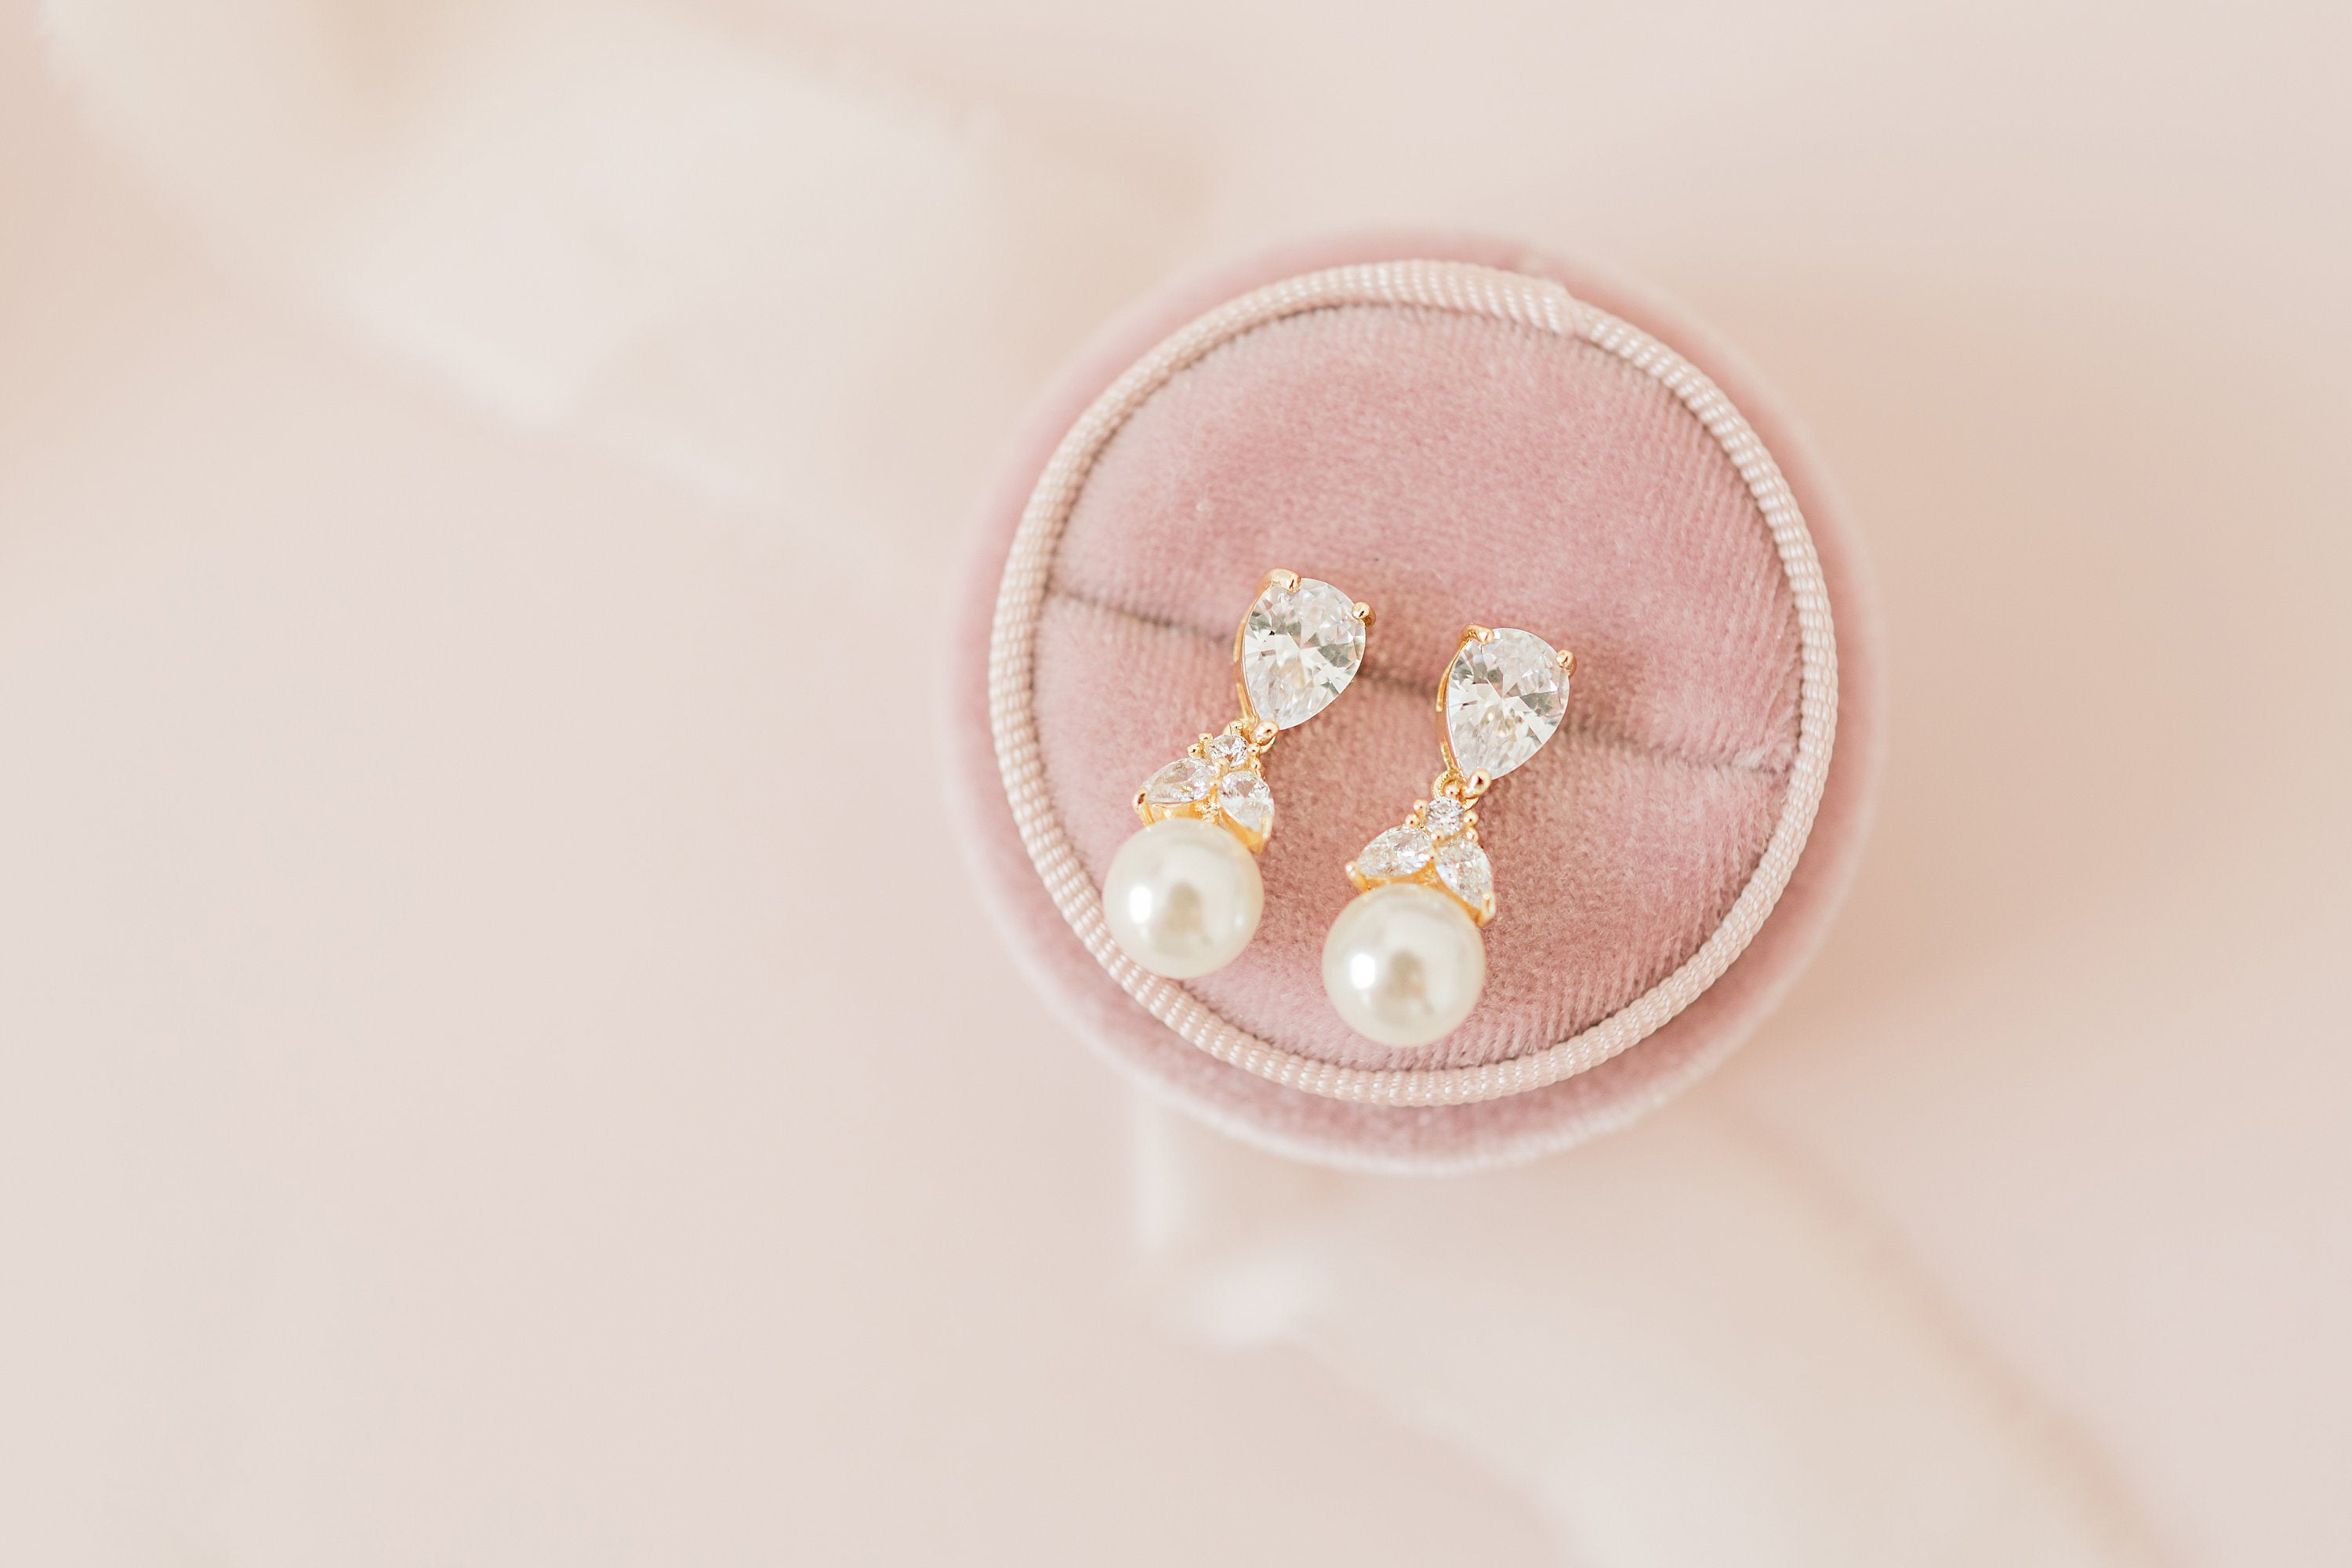 MADISON // Pearl drop earrings